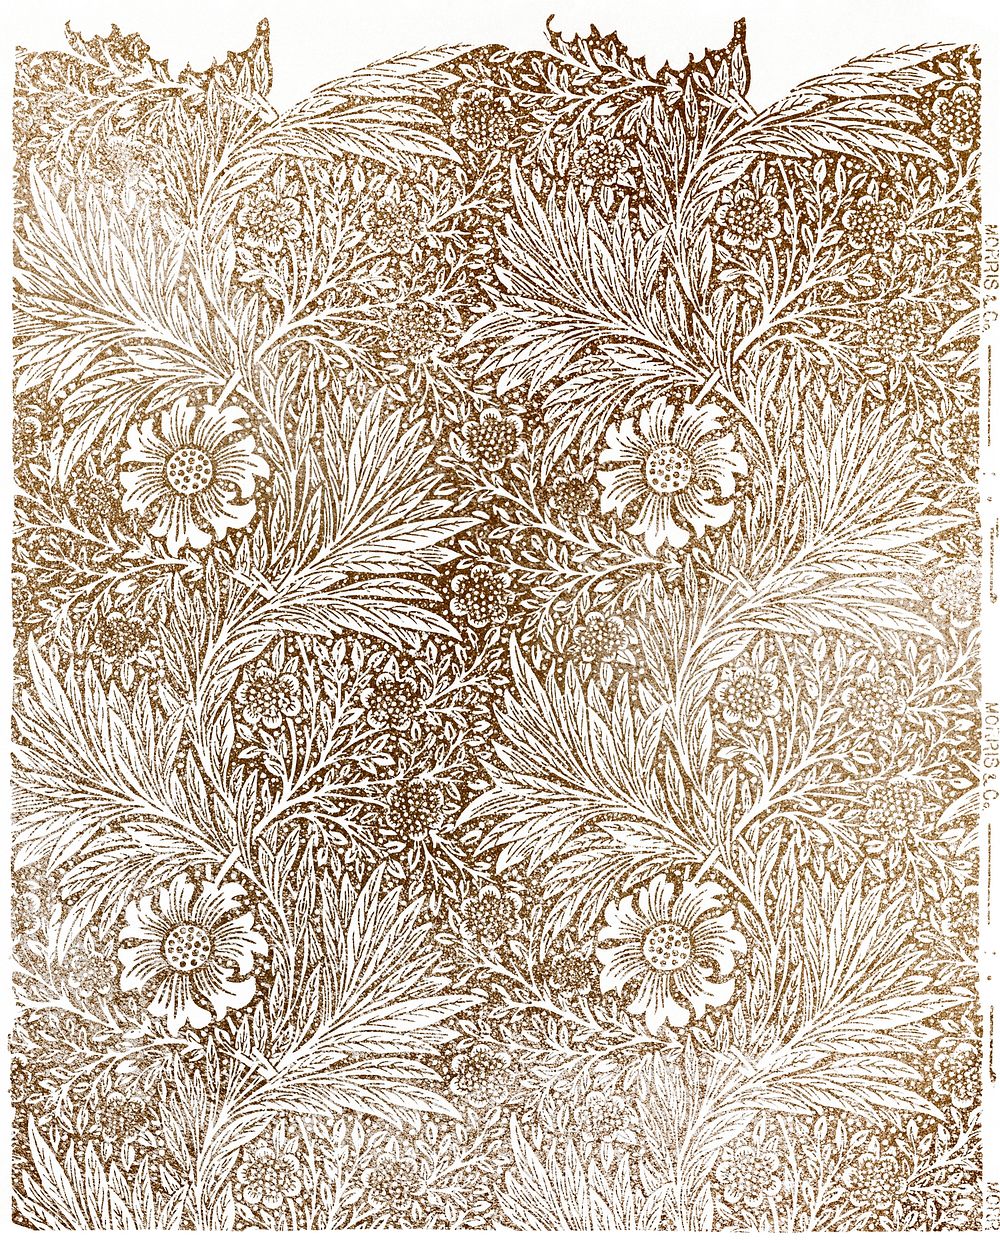 Marigold wallpaper pattern, remix of original illustration by William Morris